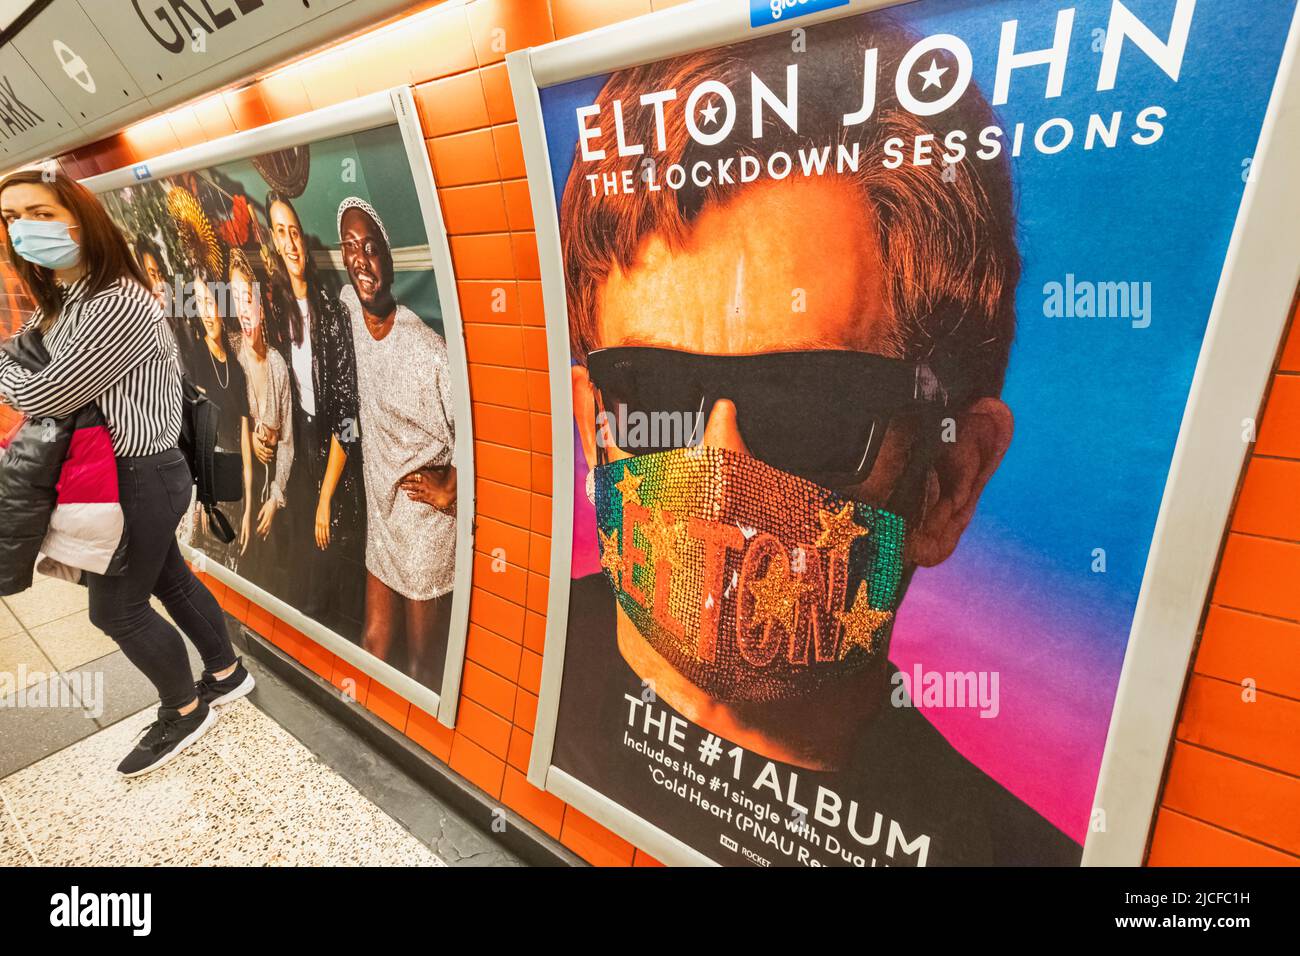 England, London, Subway Station Platform with Elton John Album Advertising Poster and Female Passenger Wearing Surgical Mask Stock Photo